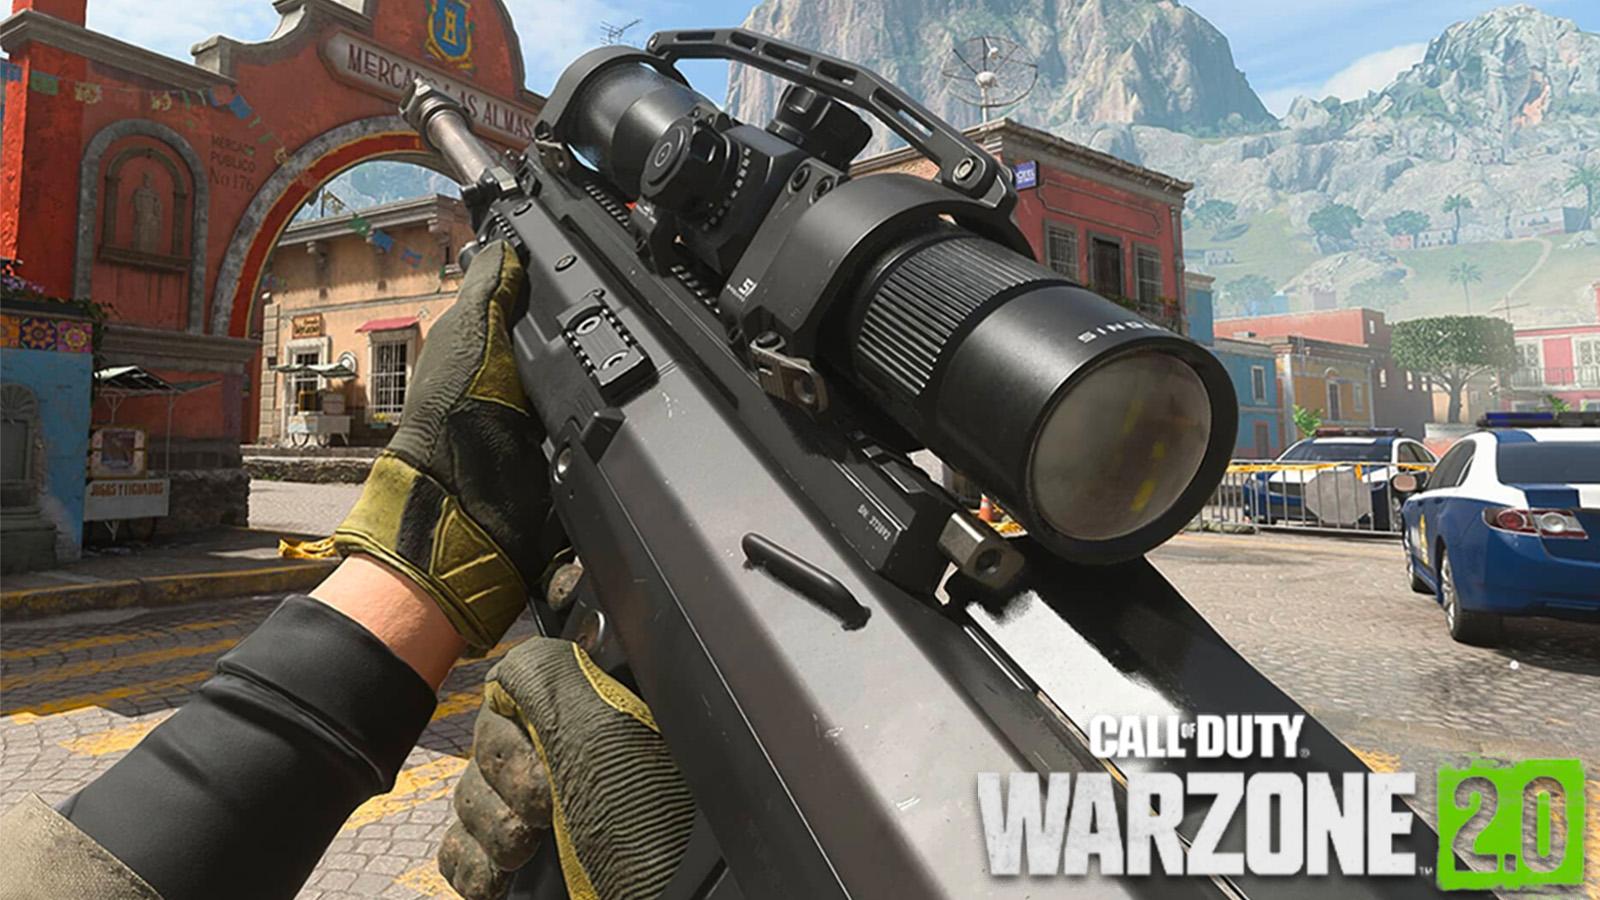 1-Shot Snipers NERFED AGAIN! #callofduty #cod #gaming #mw2 #warzone2 #